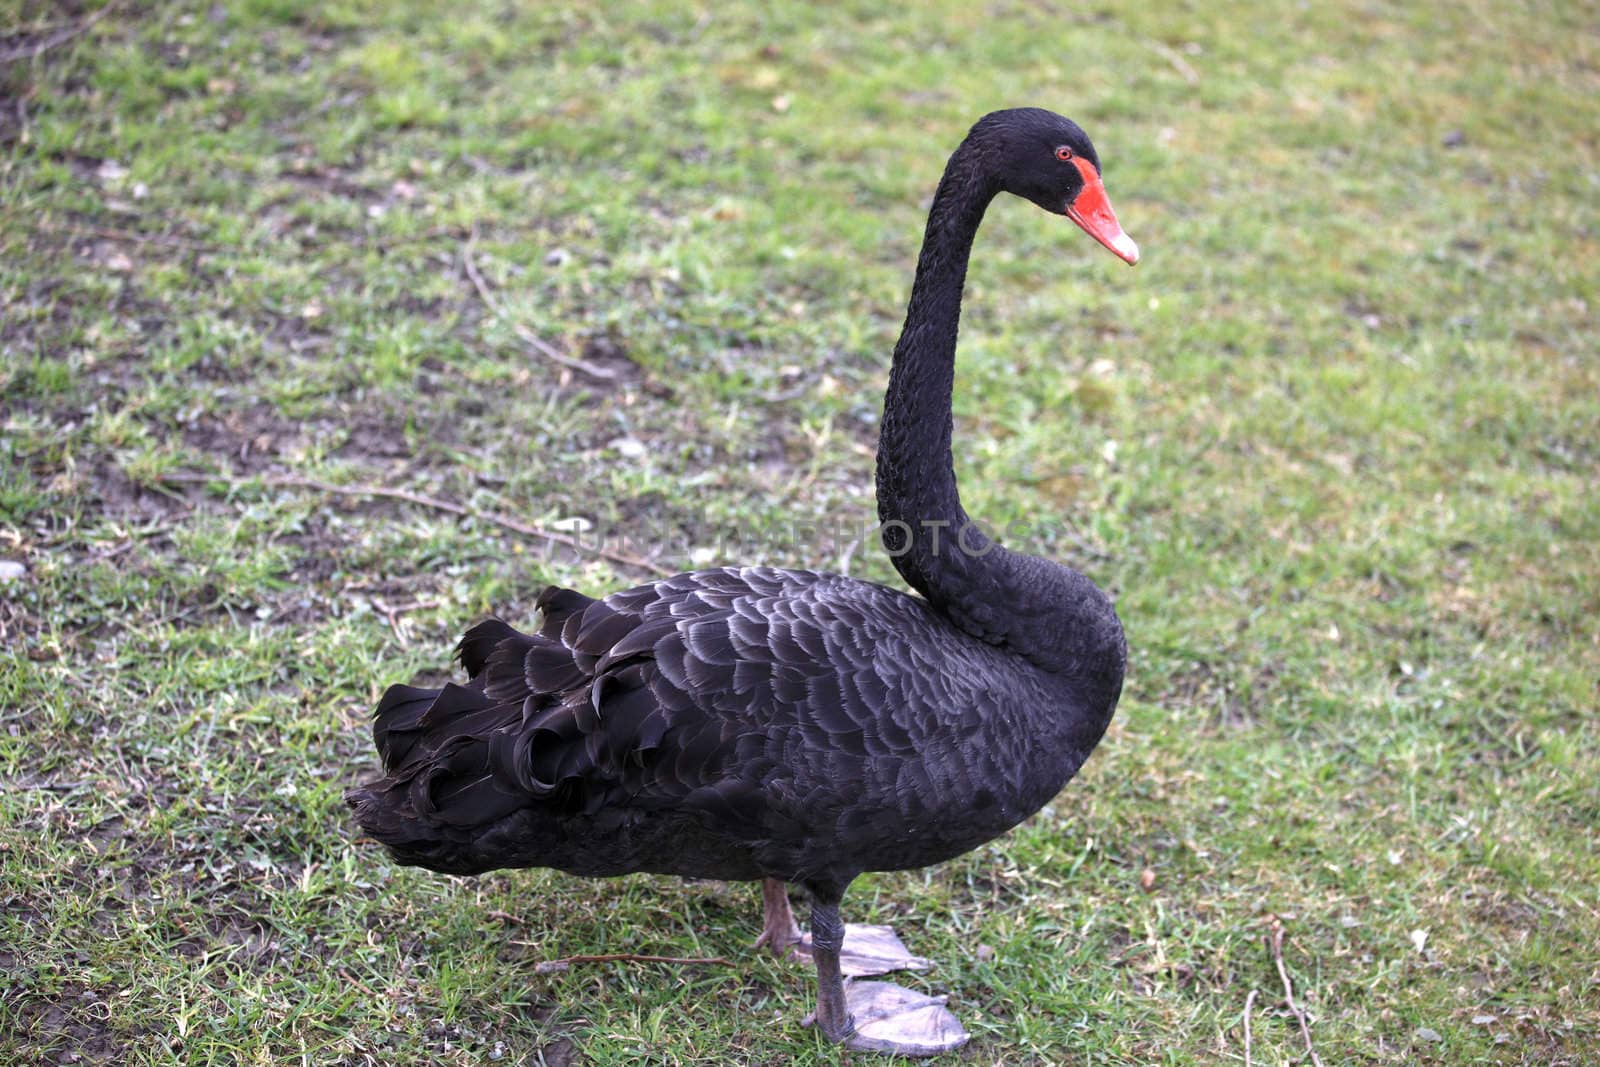 Black swan standing in a field of grass